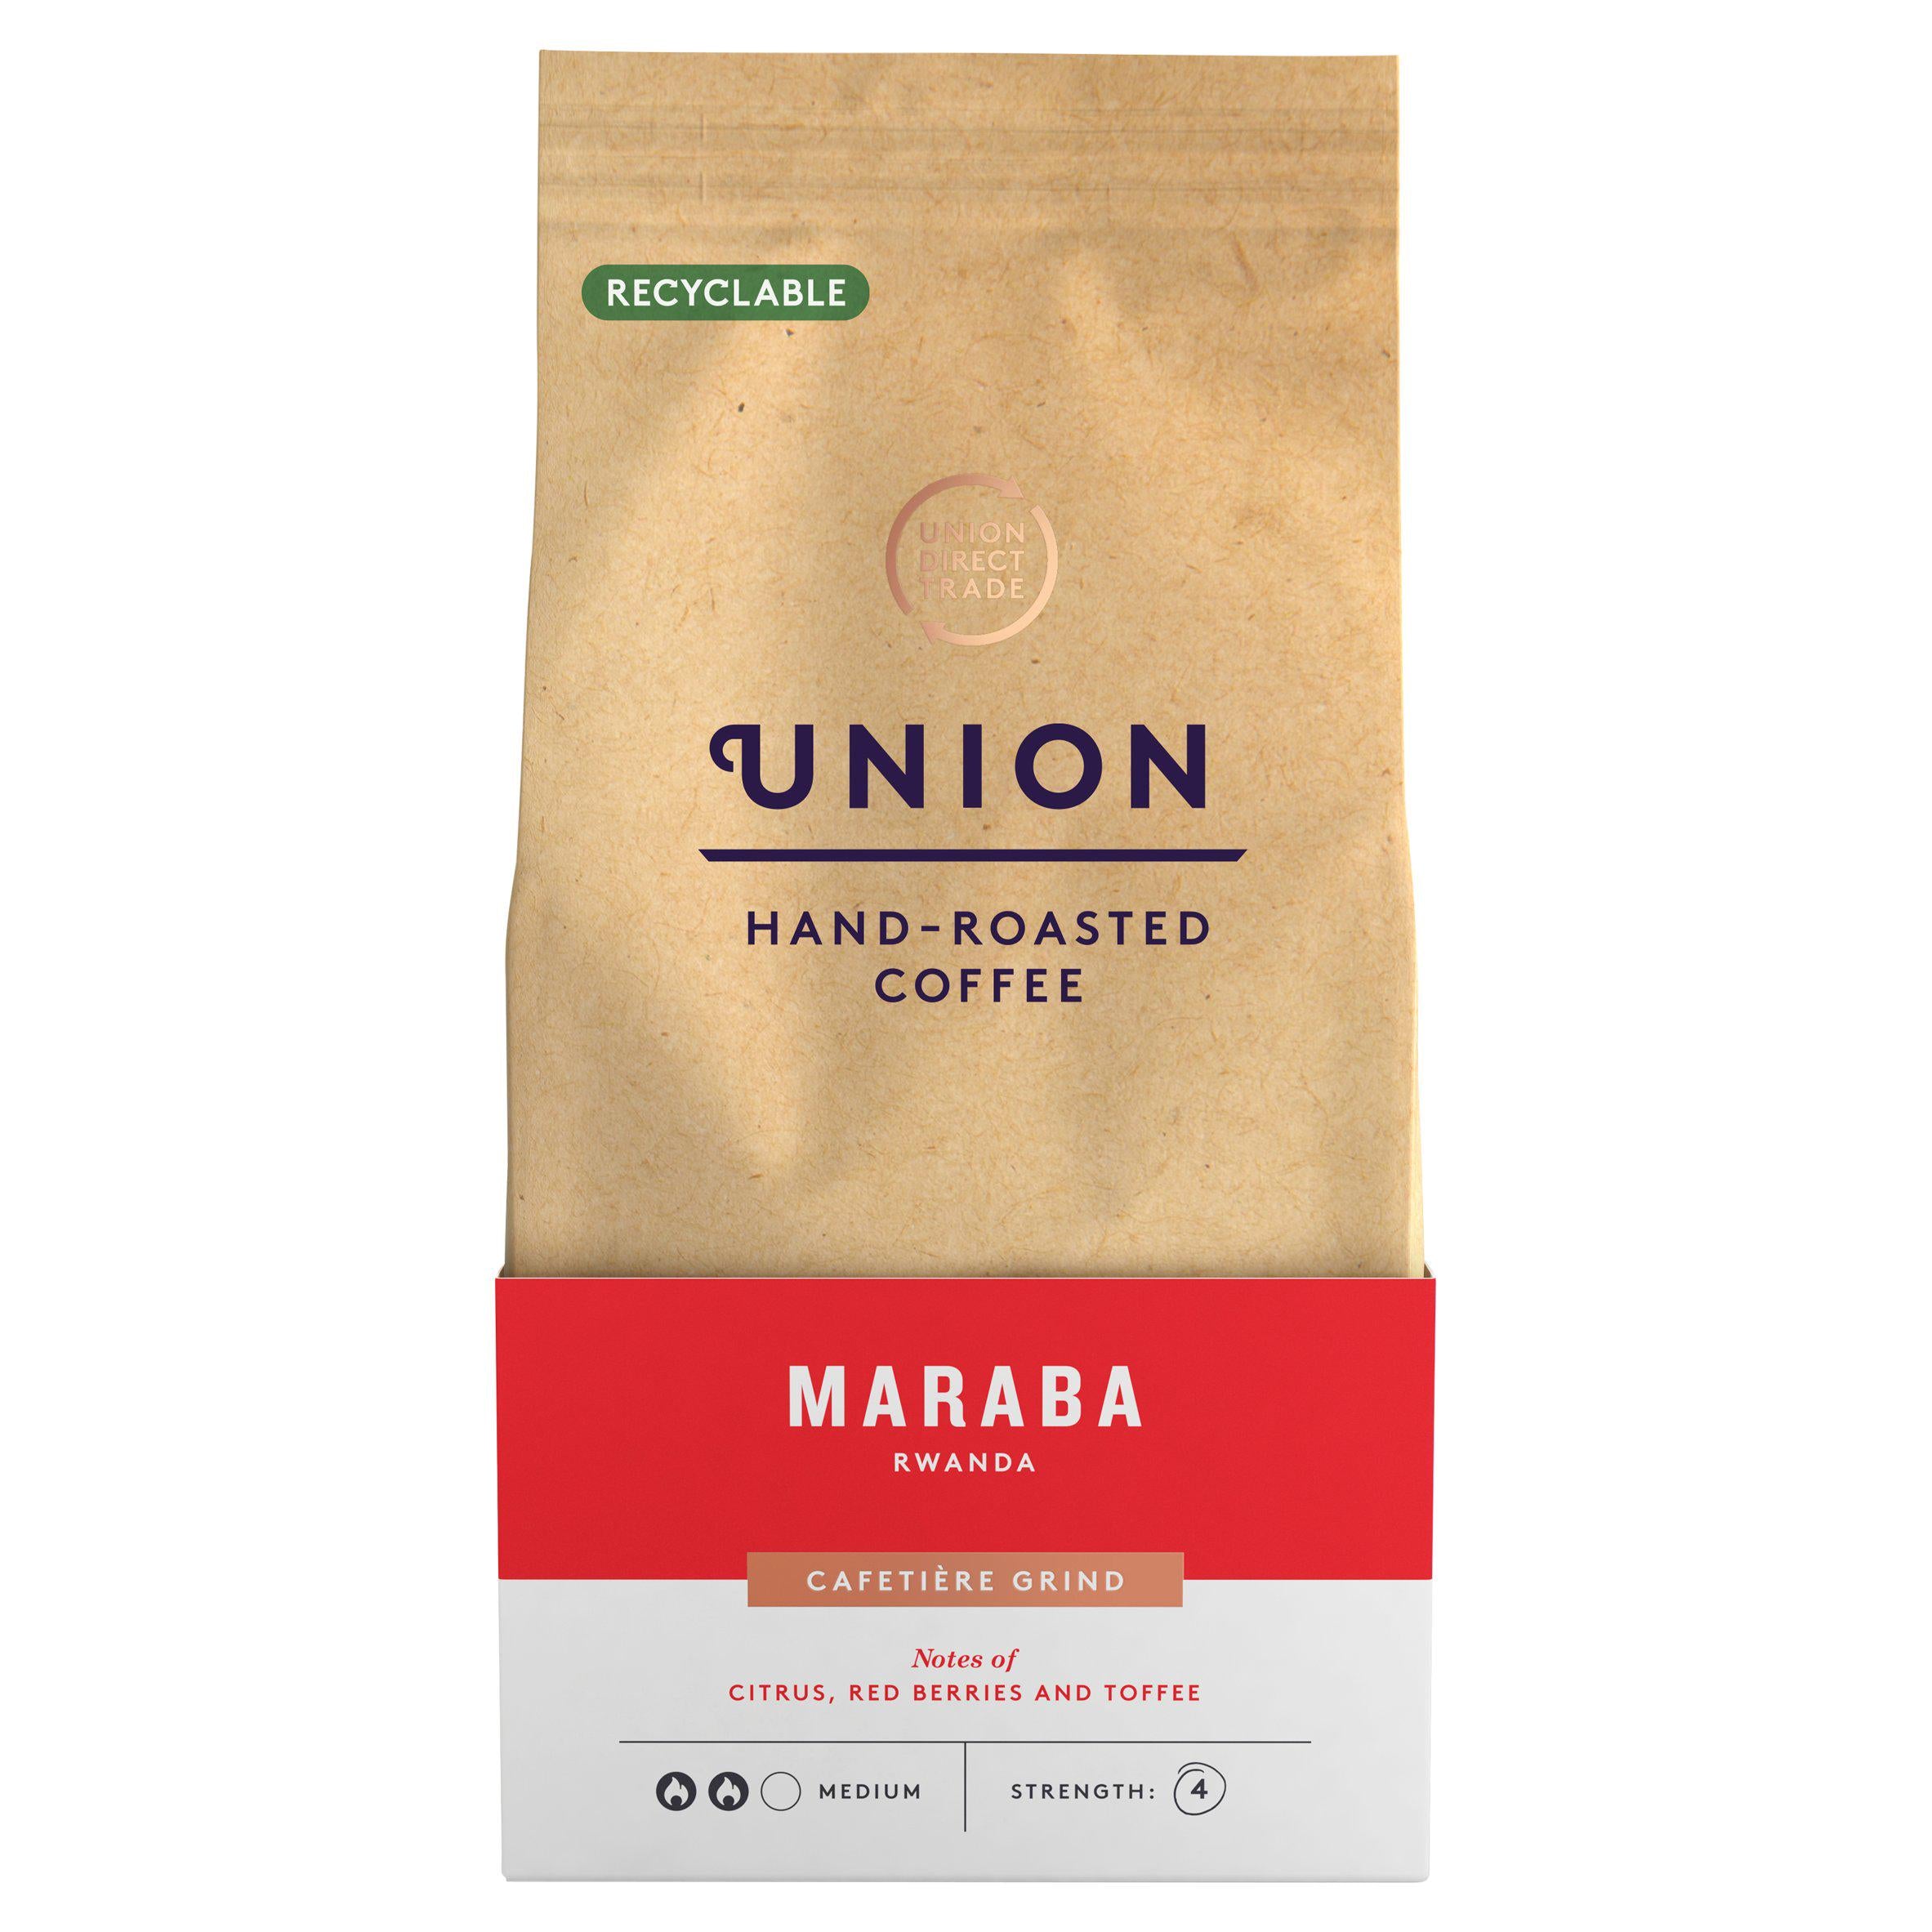 Union Hand-Roasted Coffee Maraba Rwanda Cafetière Grind 200g All coffee Sainsburys   